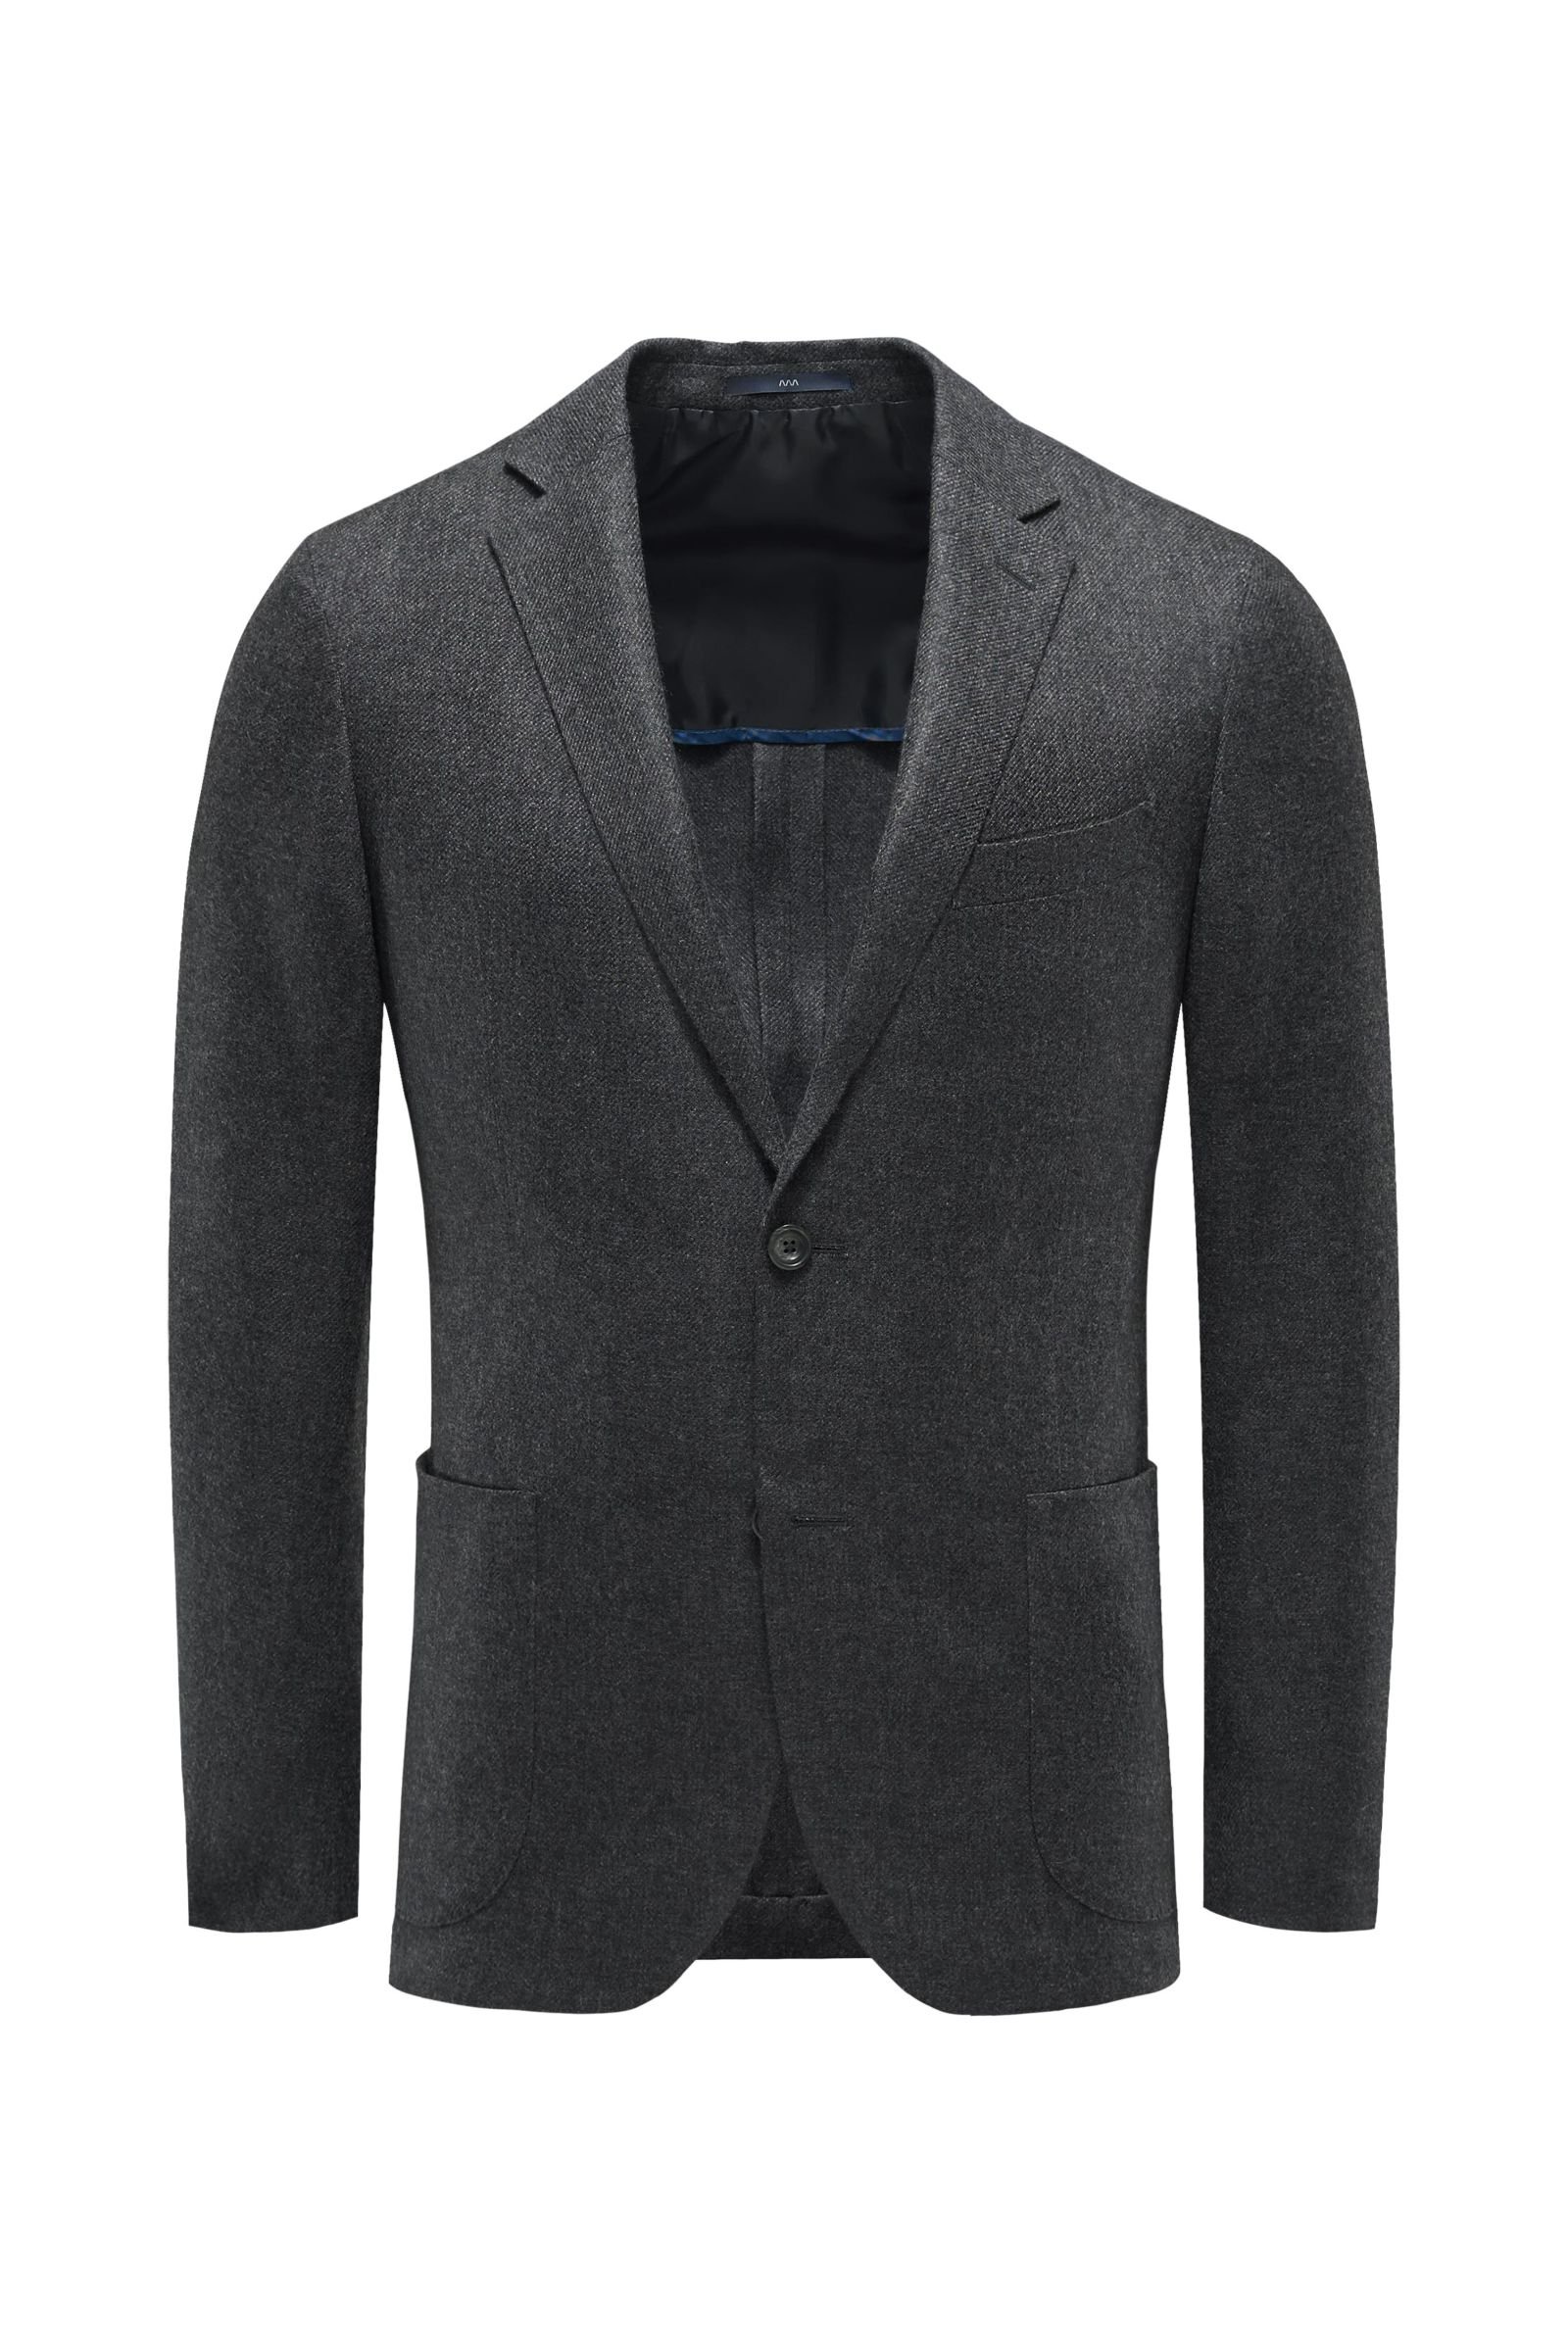 Cashmere smart-casual jacket 'Sawyer' dark grey